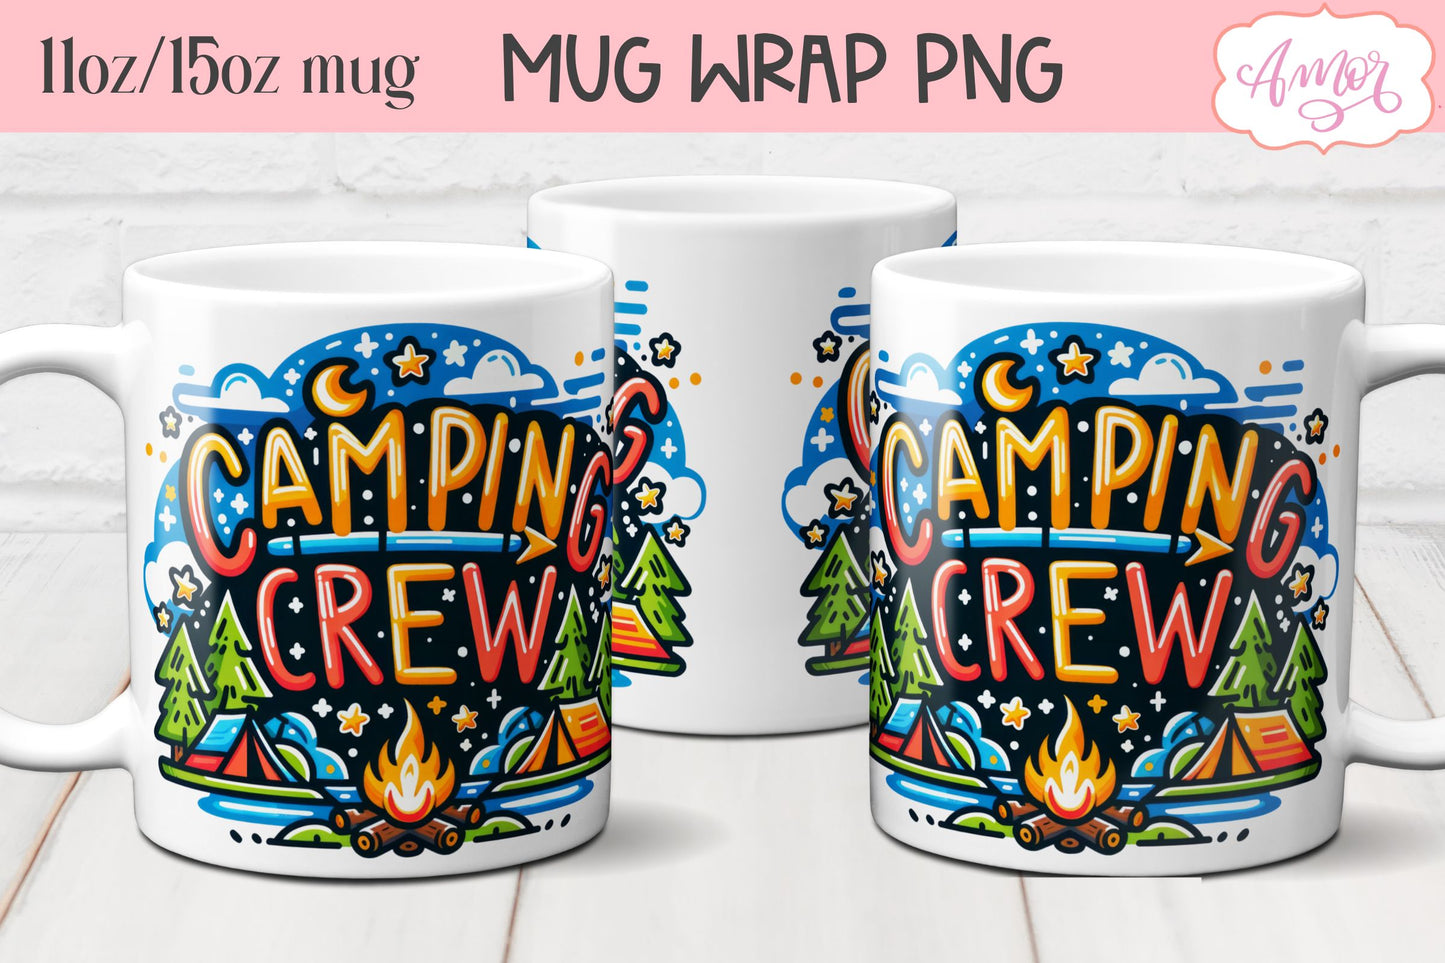 Camping crew mug wrap PNG for sublimation 11oz 15oz